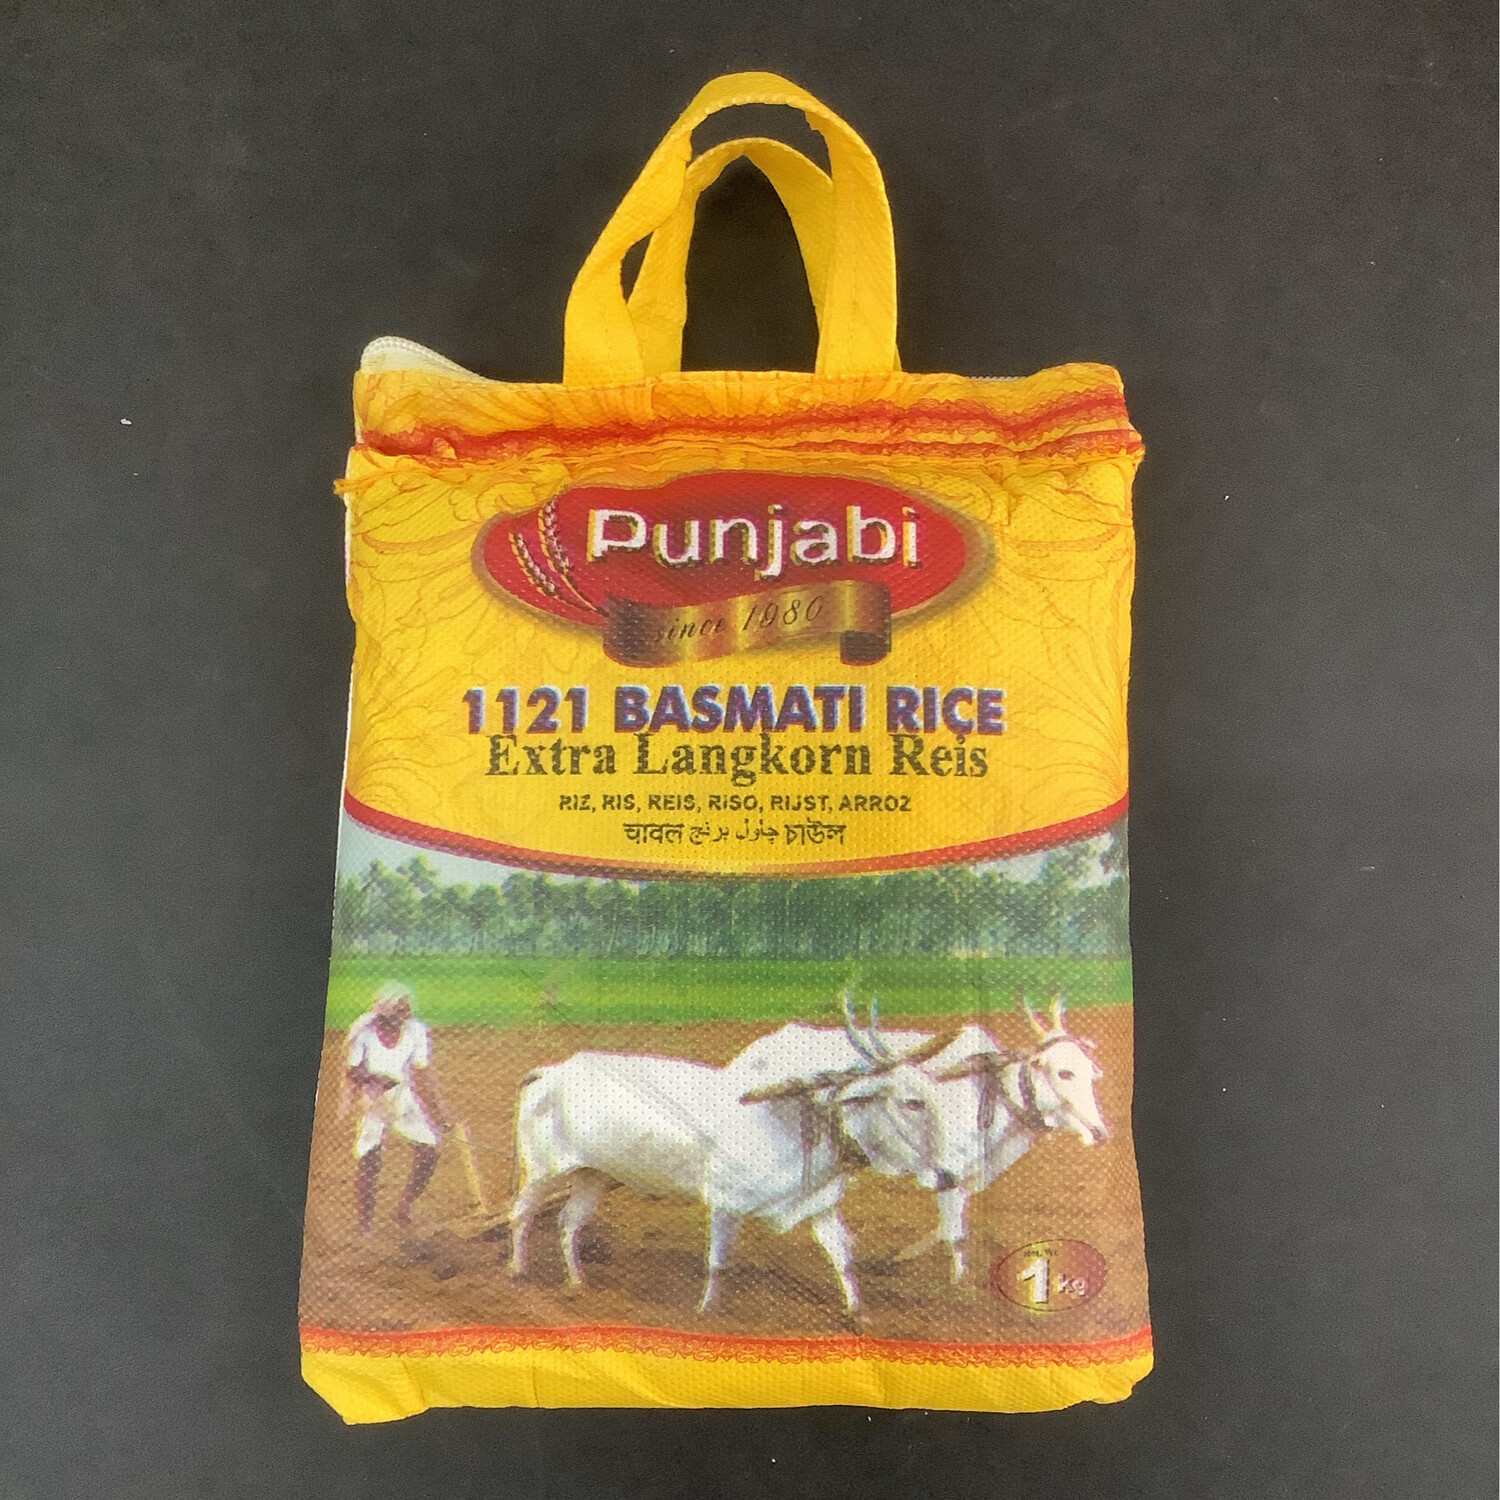 Punjabi 1121 basmati rice 1kg